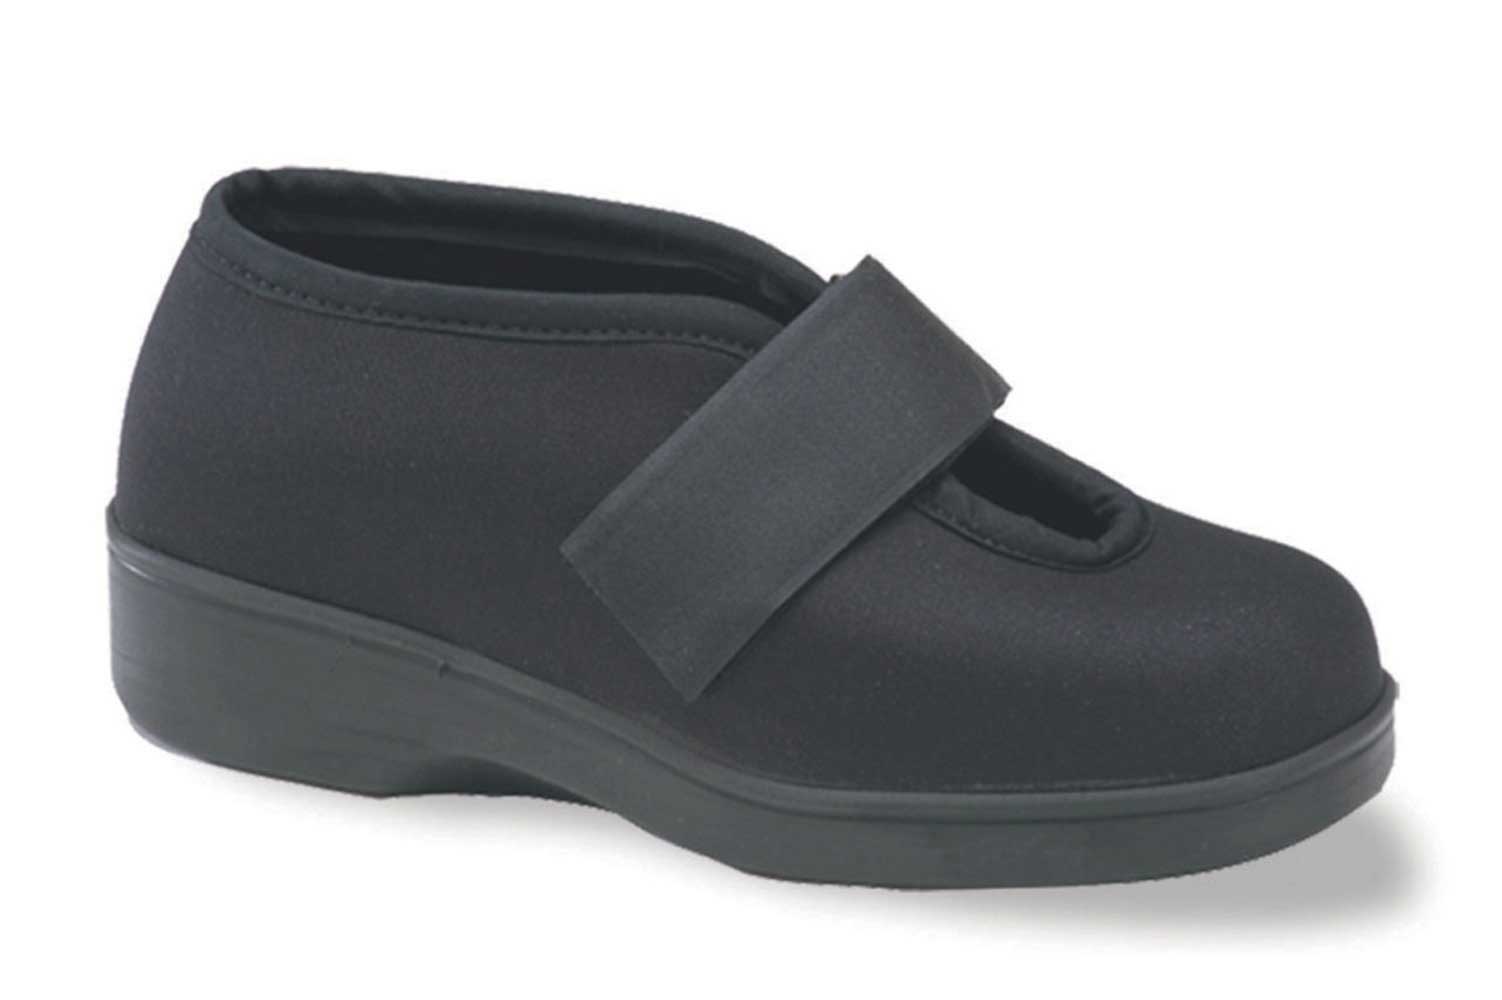 Apex Ambulator Shoes 1201 Men's Comfort Orthopedic Diabetic Shoe - Extra Depth For Orthotics - Extra Wide